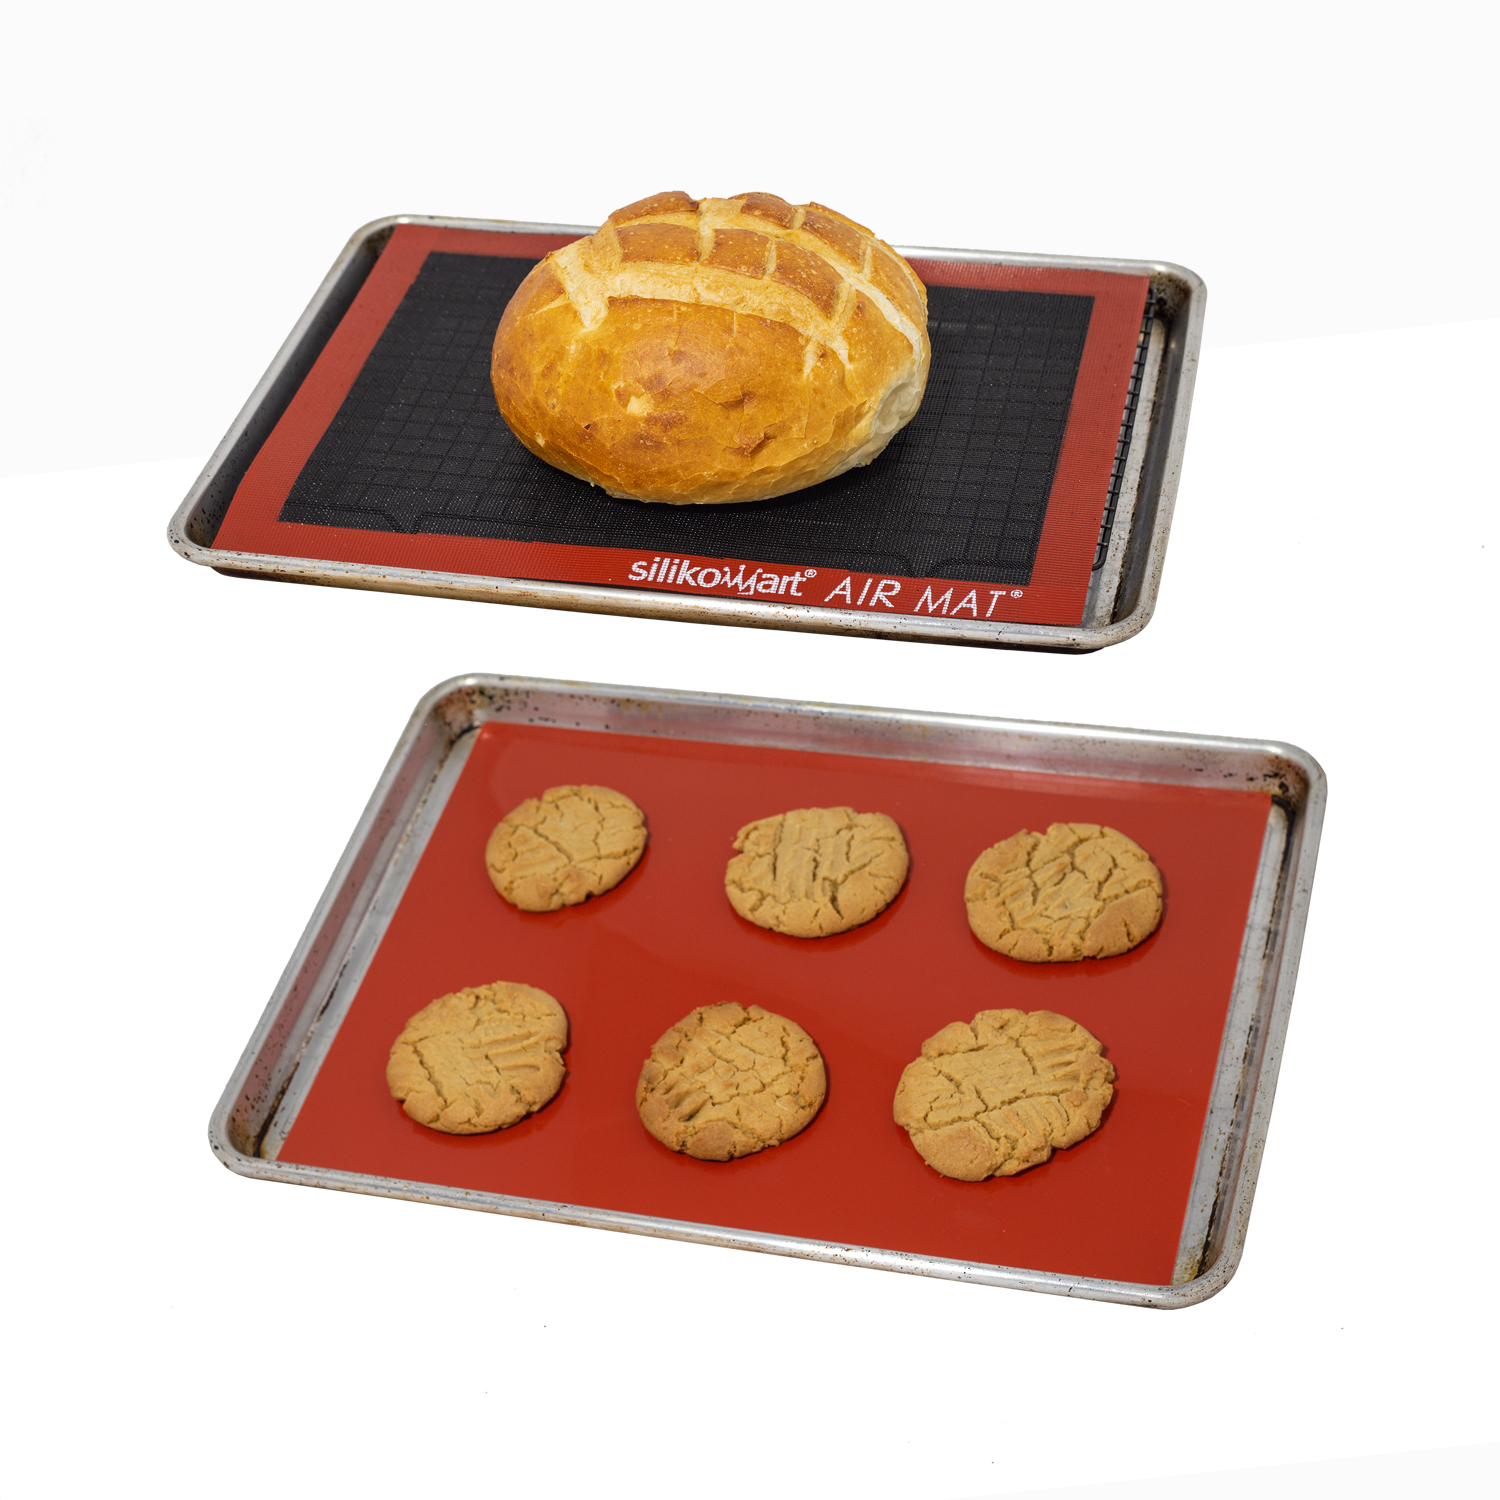 Bread Macaron Baking Mat Sweeethome 3 Pcs Silicone Baking Mat Non Stick Liner Cookie Sheets Reusable Baking Mats for Macaron 3 pcs Cake